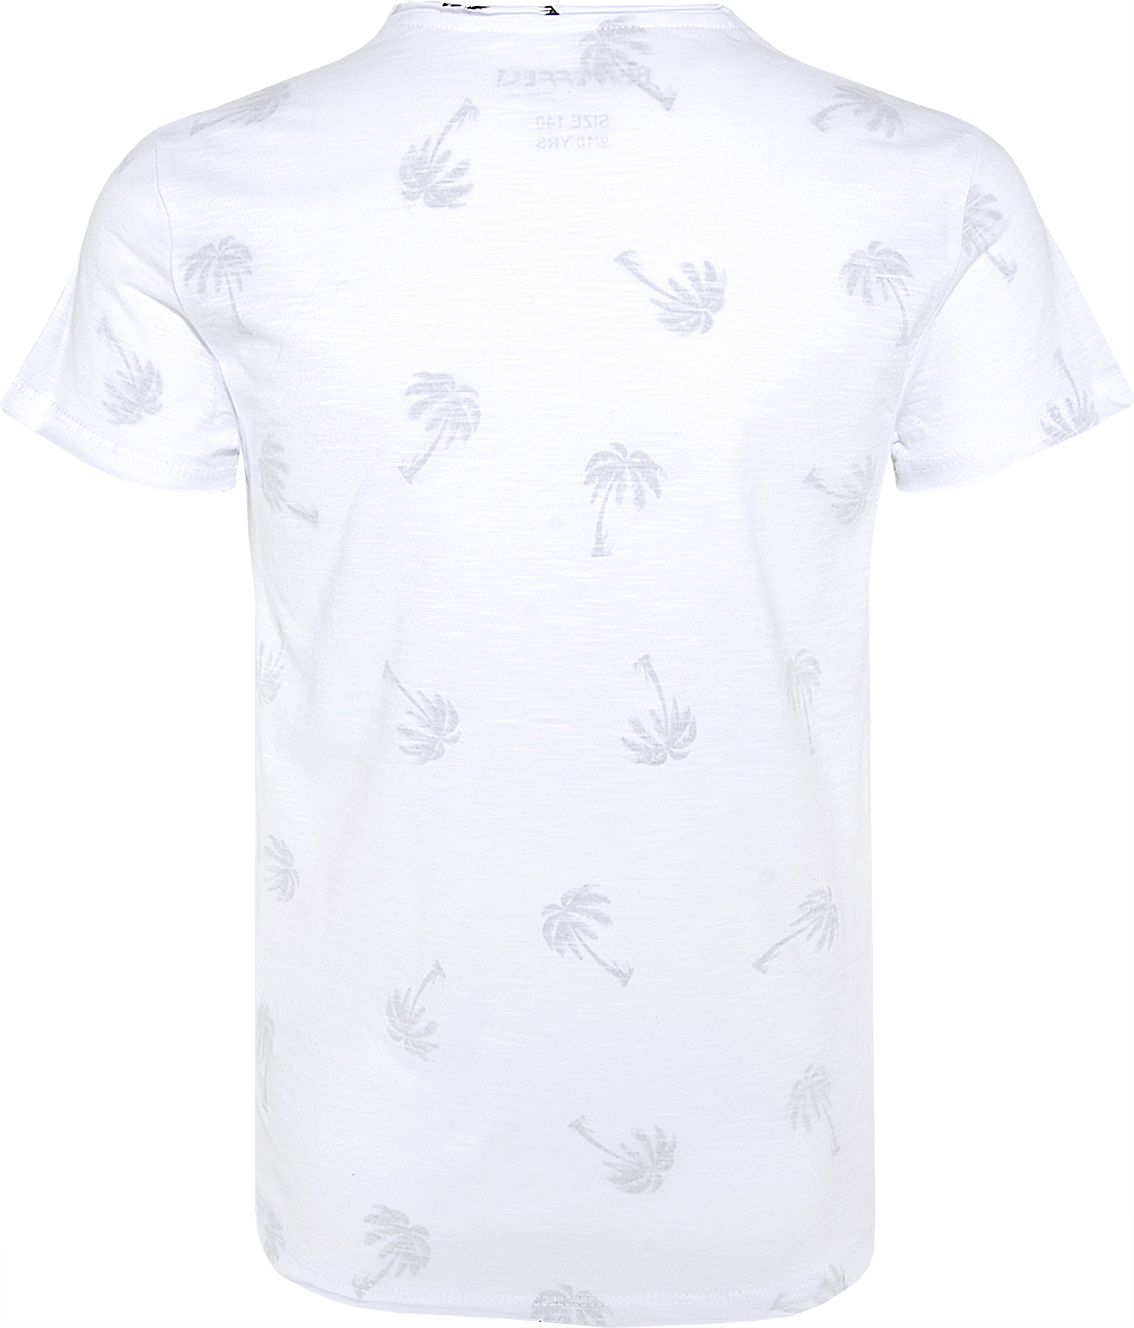 6054-Boys T-Shirt -Palms allover